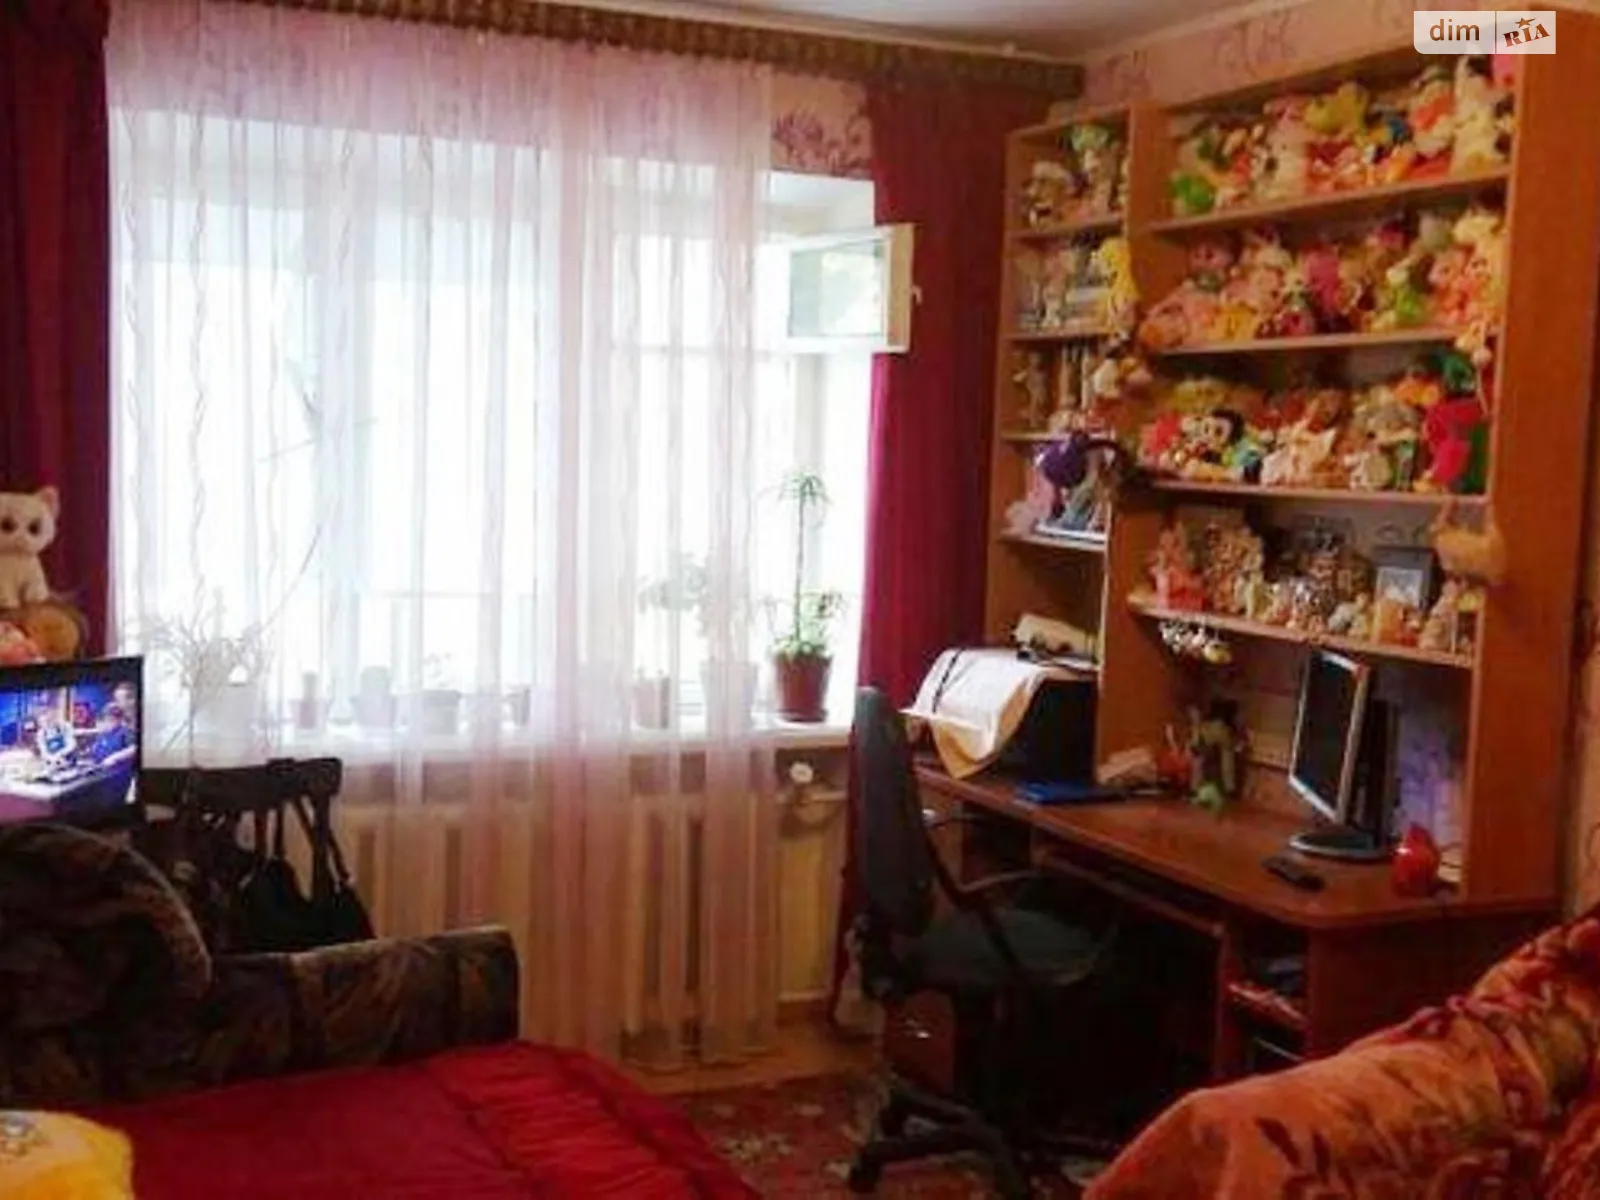 Продается комната 10 кв. м в Одессе, цена: 12000 $ - фото 1